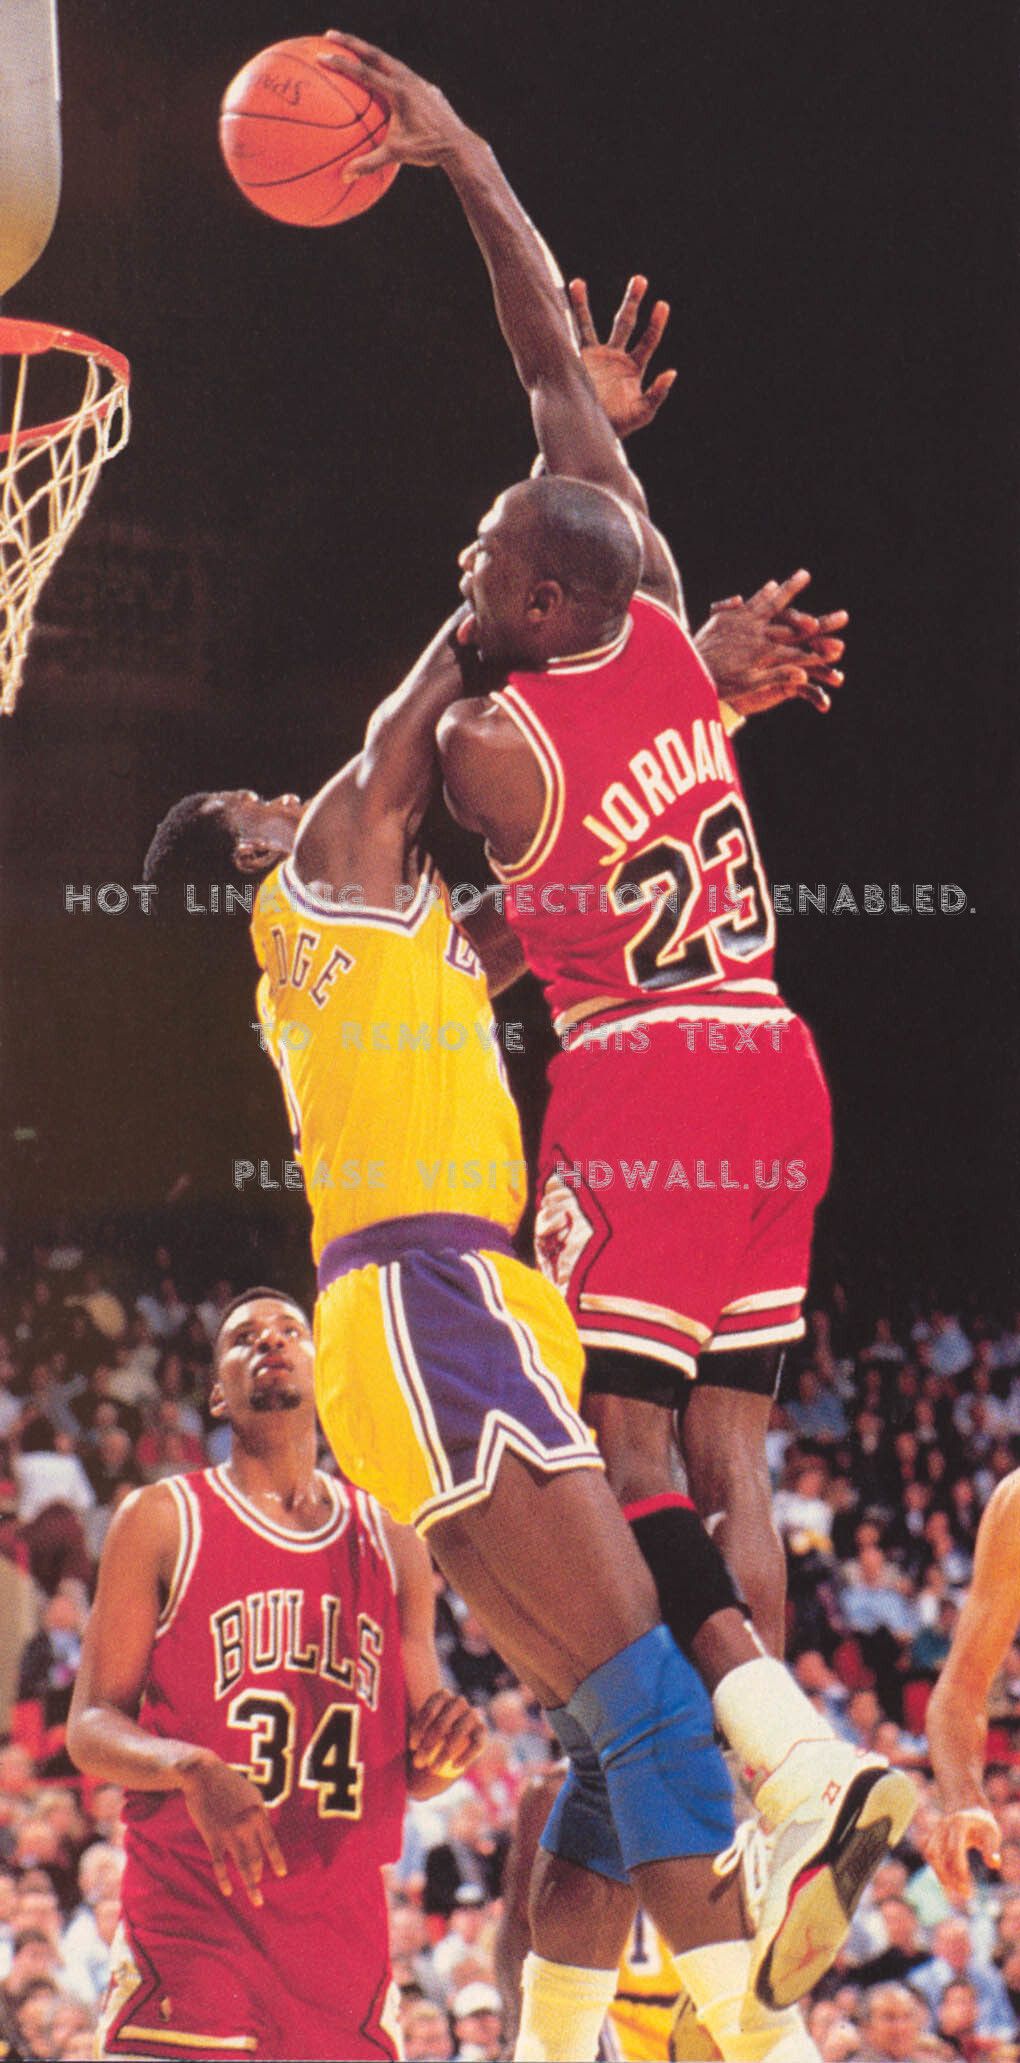 Michael Jordan Wallpaper Dunk (64+ pictures)